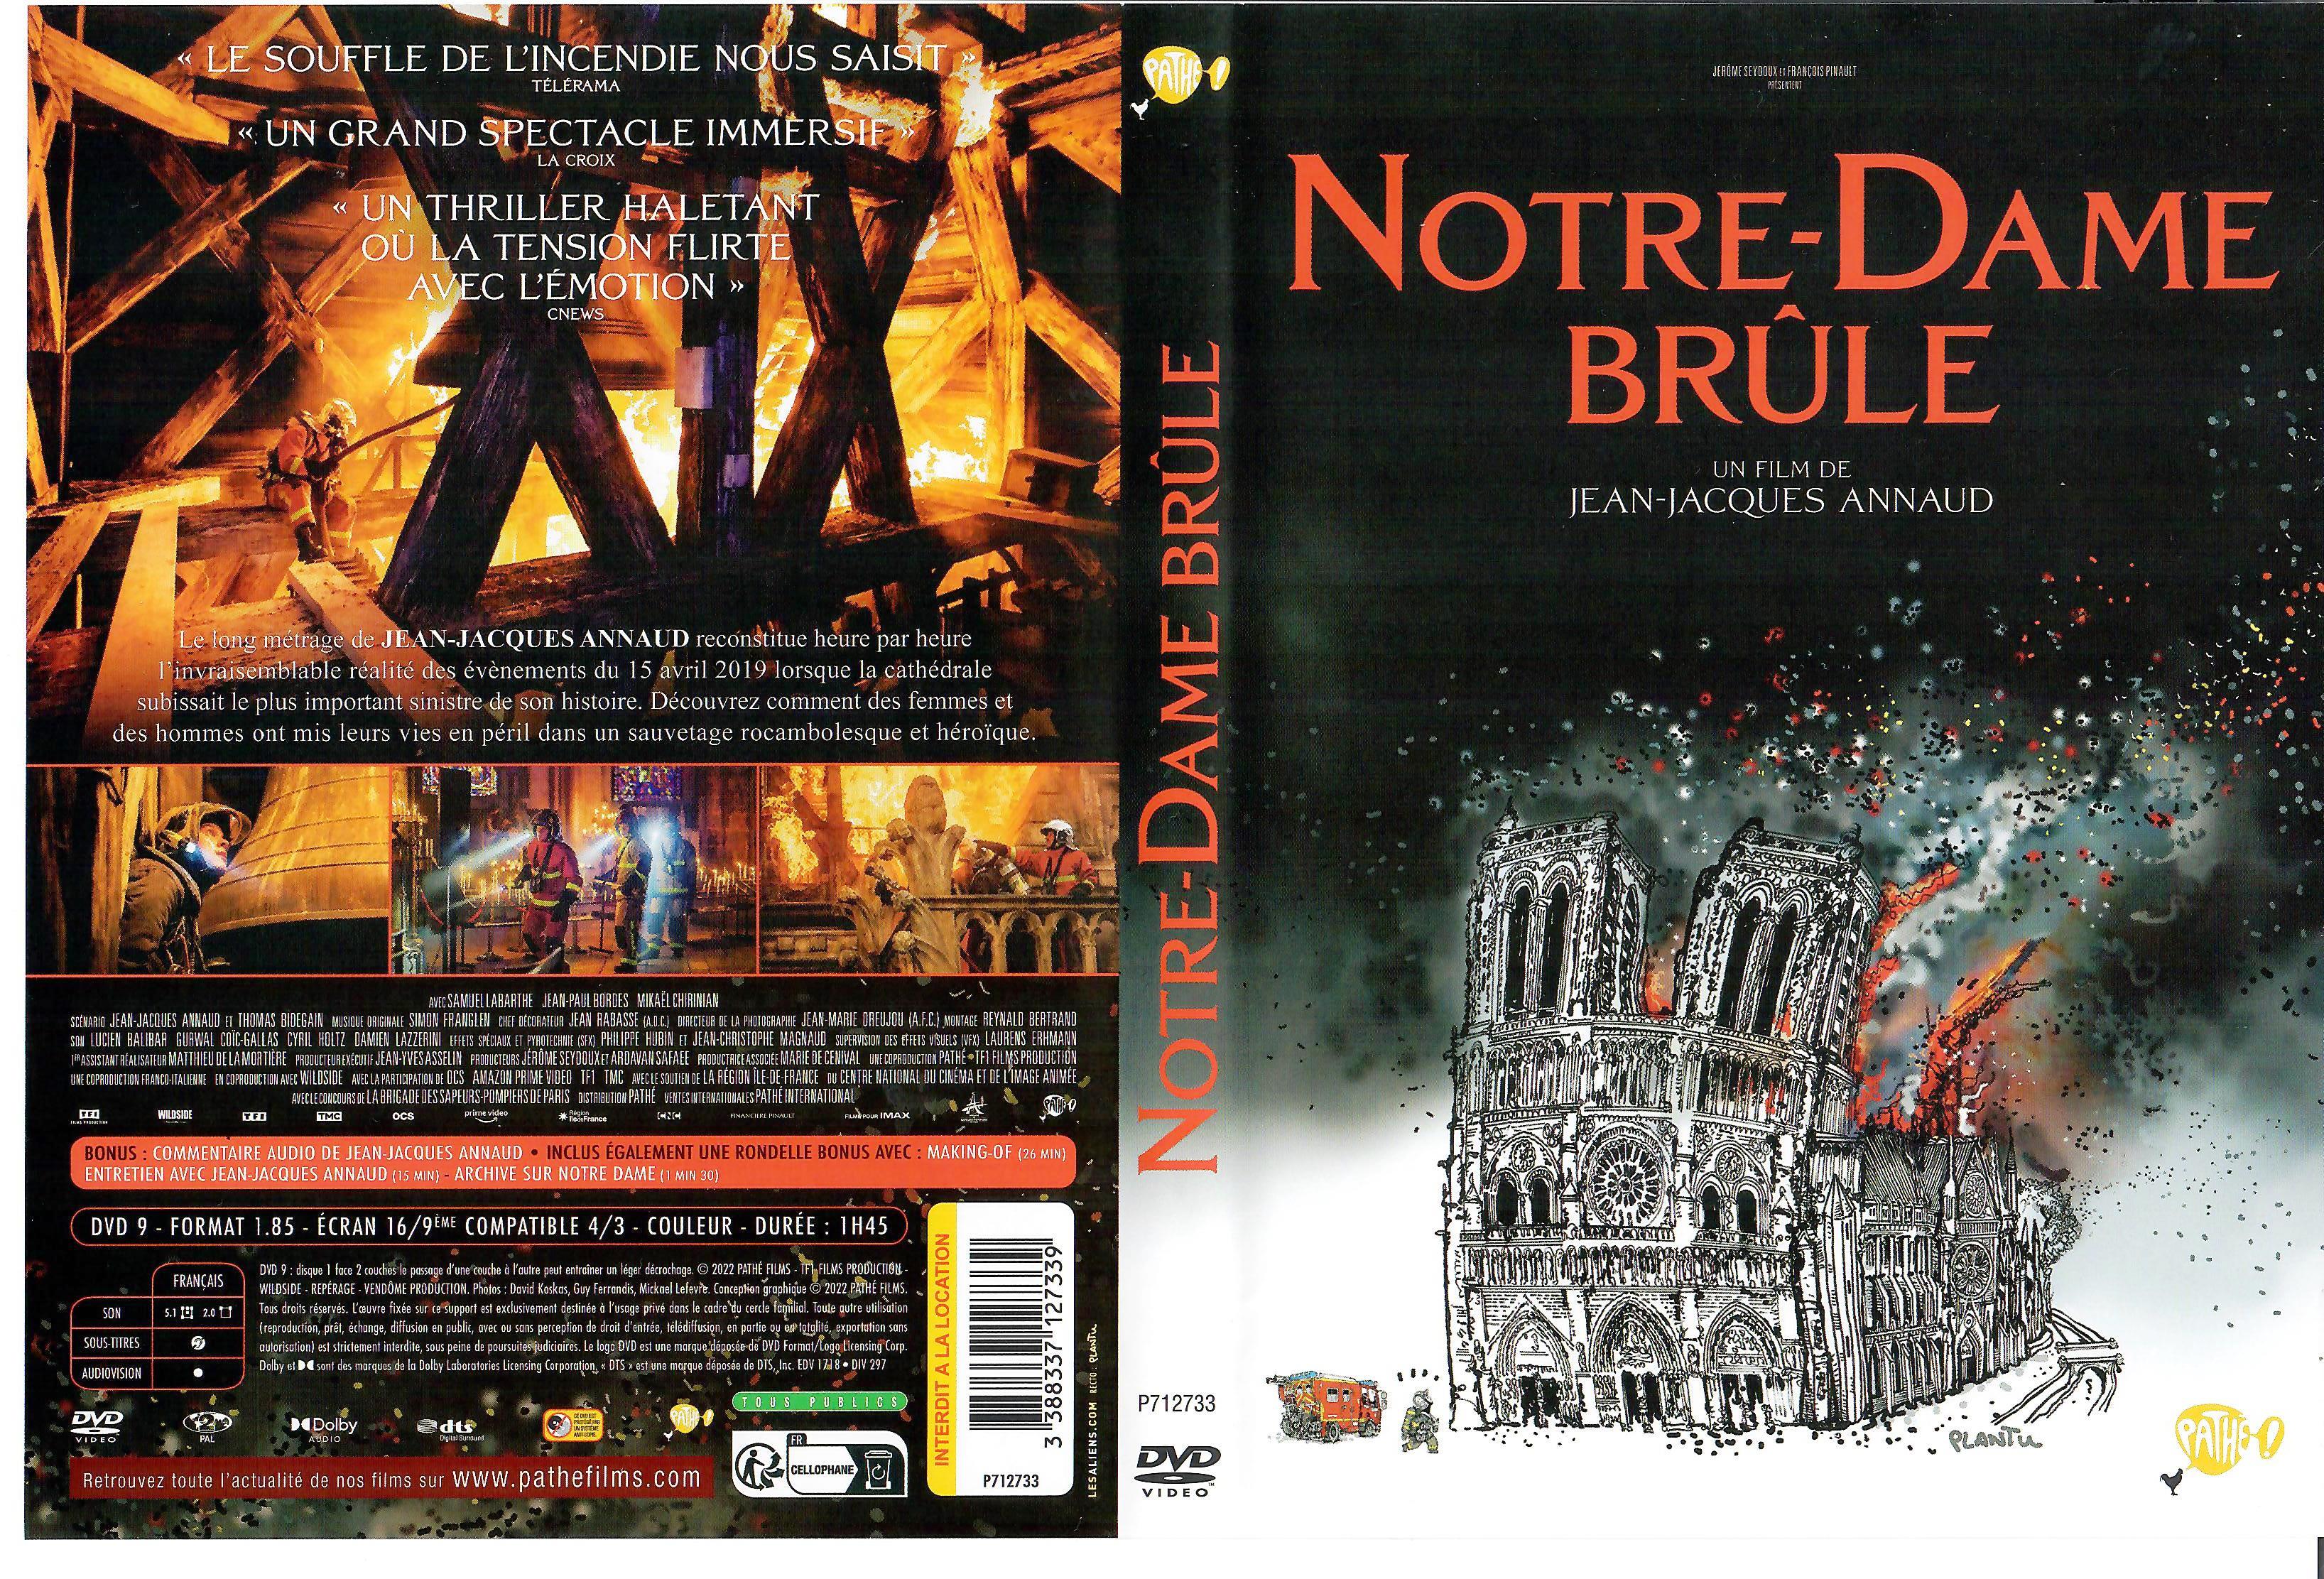 Jaquette DVD Notre-Dame brule